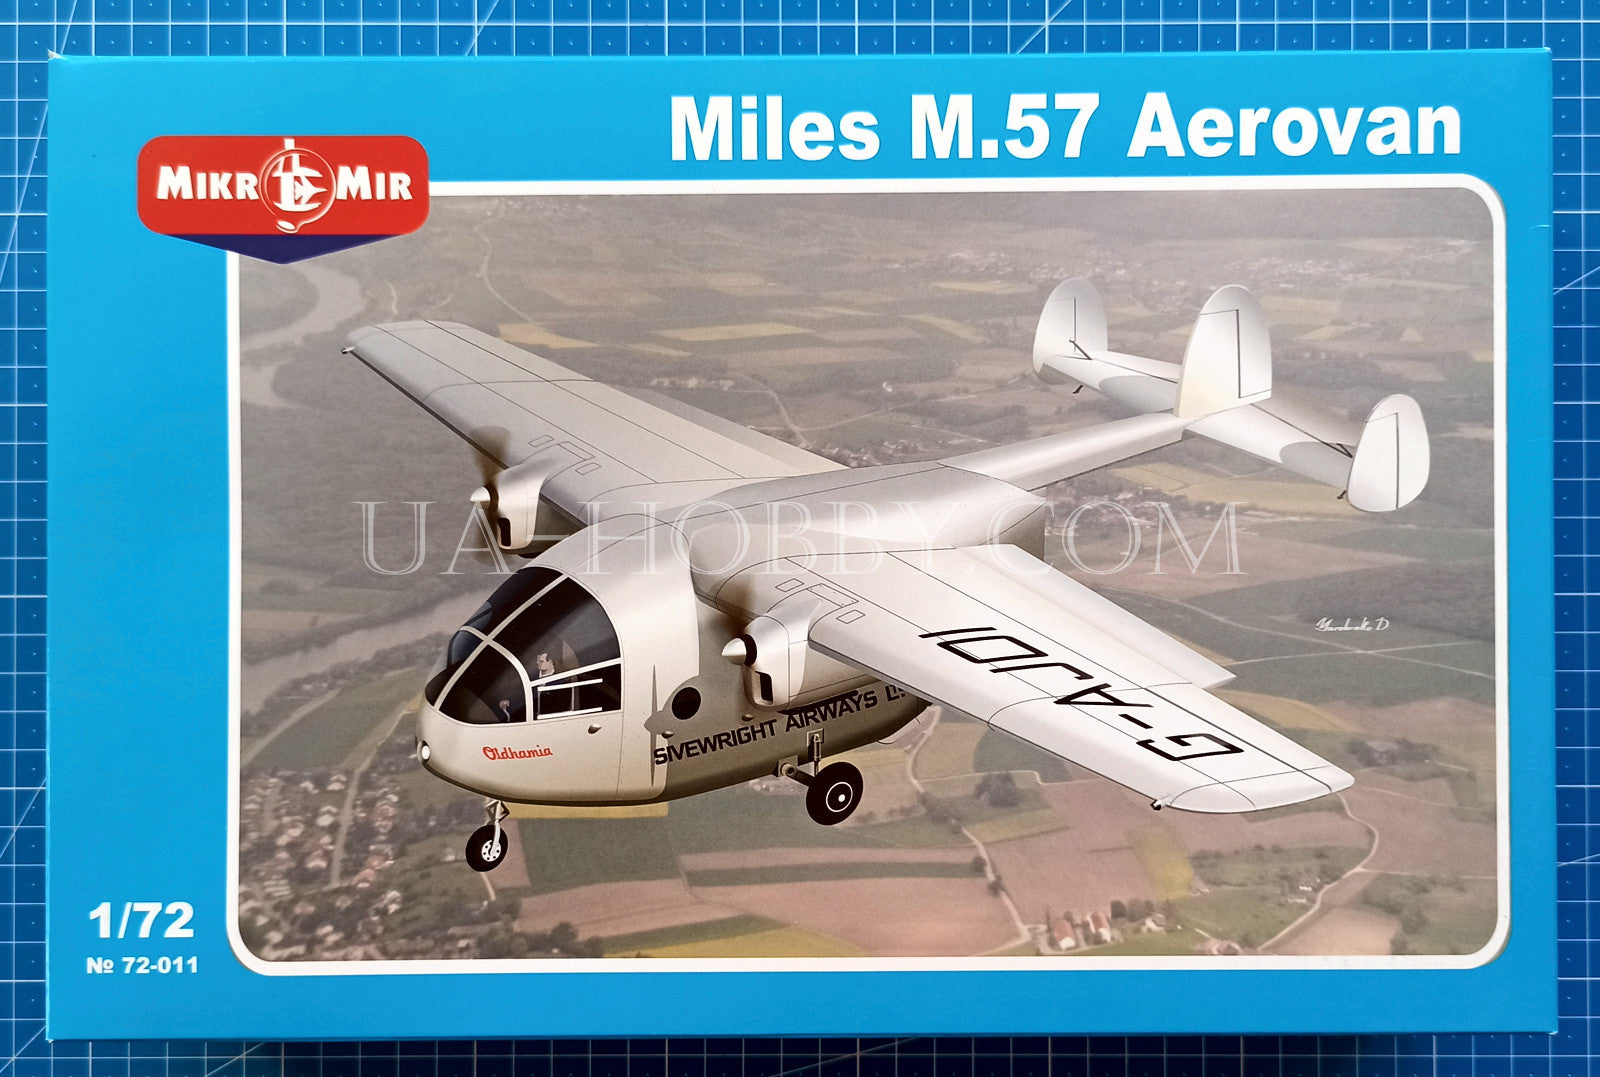 1/72 Miles M.57 Aerovan. MikroMir 72-011